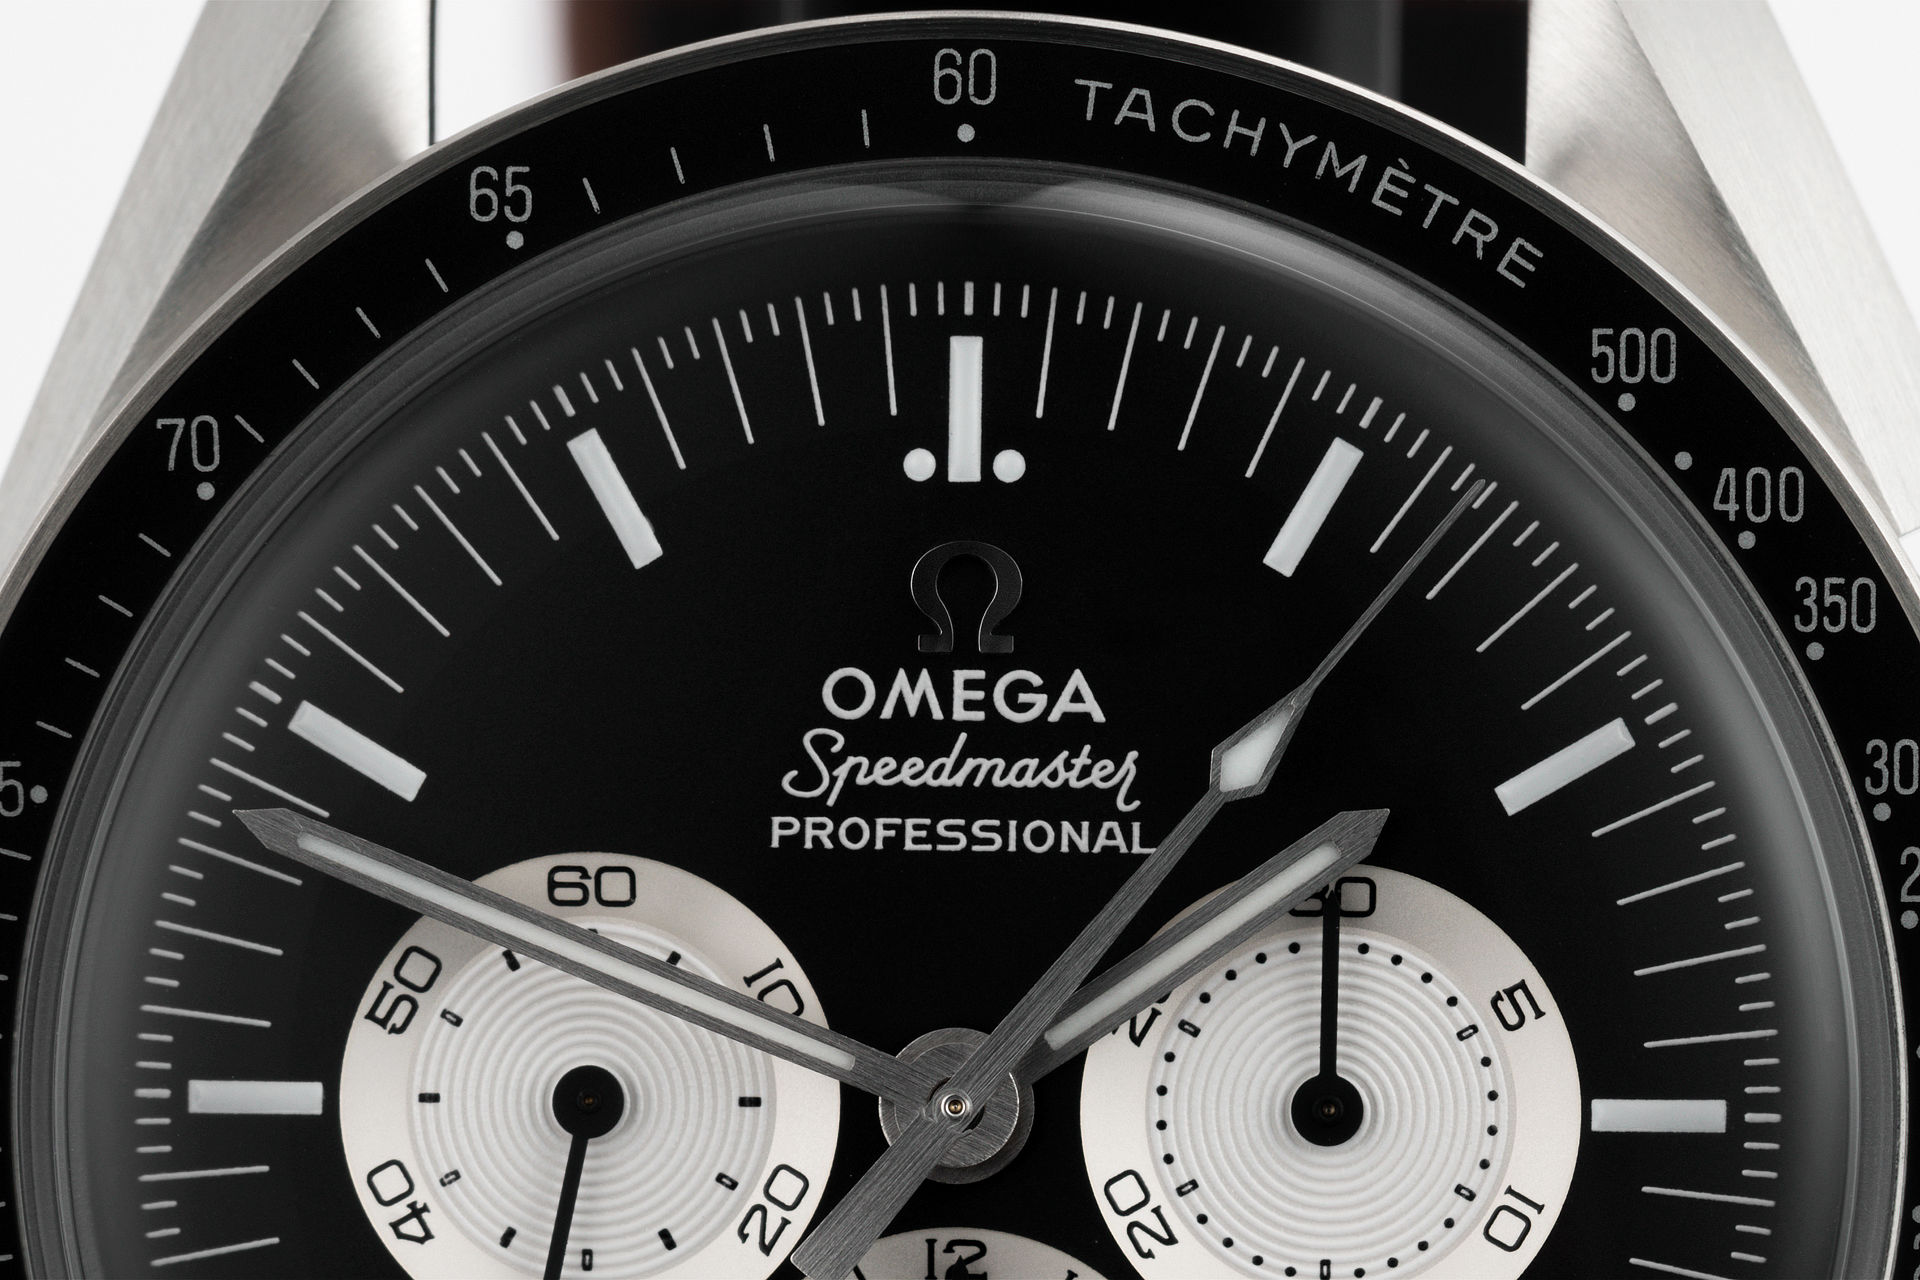 ref 31132423001001 | Limited Edition 'Full Set' | Omega Speedmaster